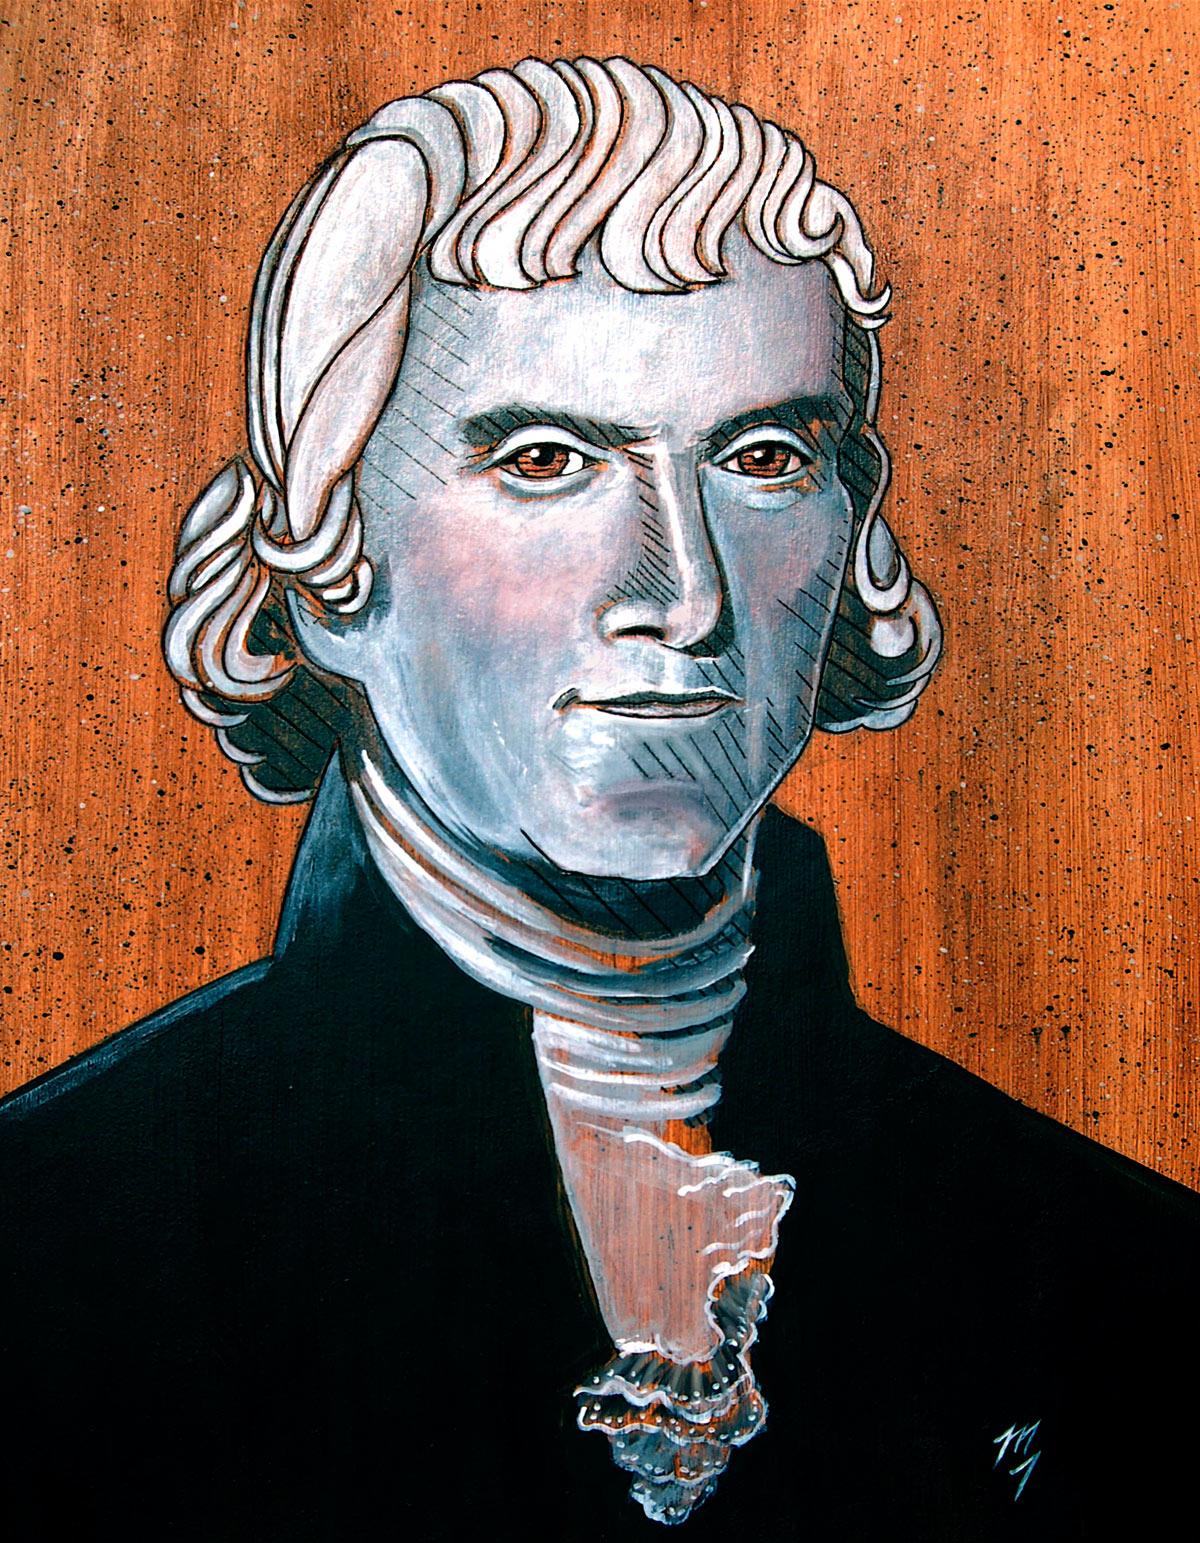 Thomas Jefferson - Portrait